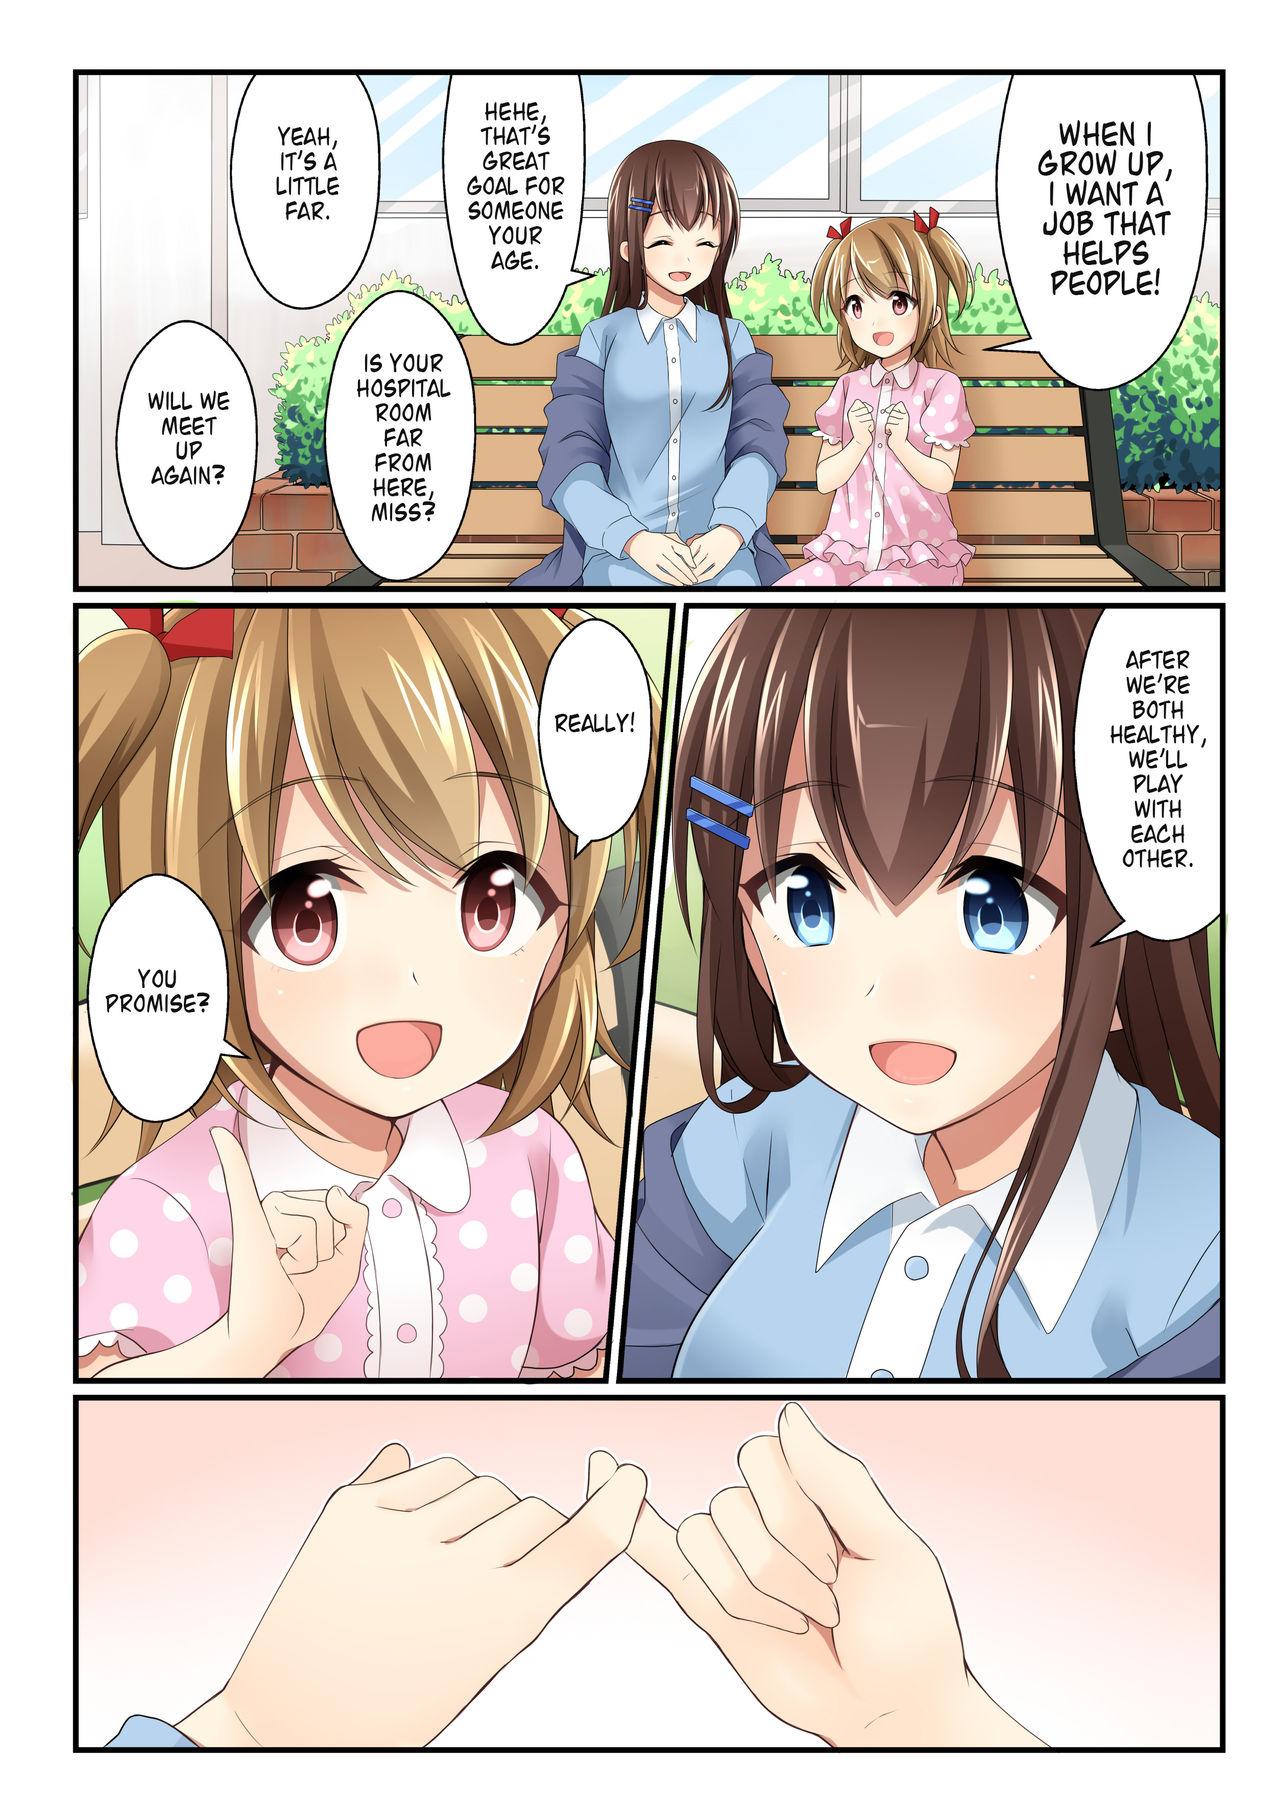 [Shinenkan] Joutaihenka Manga vol. 2 ~Onnanoko no Asoko wa dou natterun no? Hen~ | Transformation Comics vol. 2 ~What's the Deal with Girl's Privates?~ [English] 0